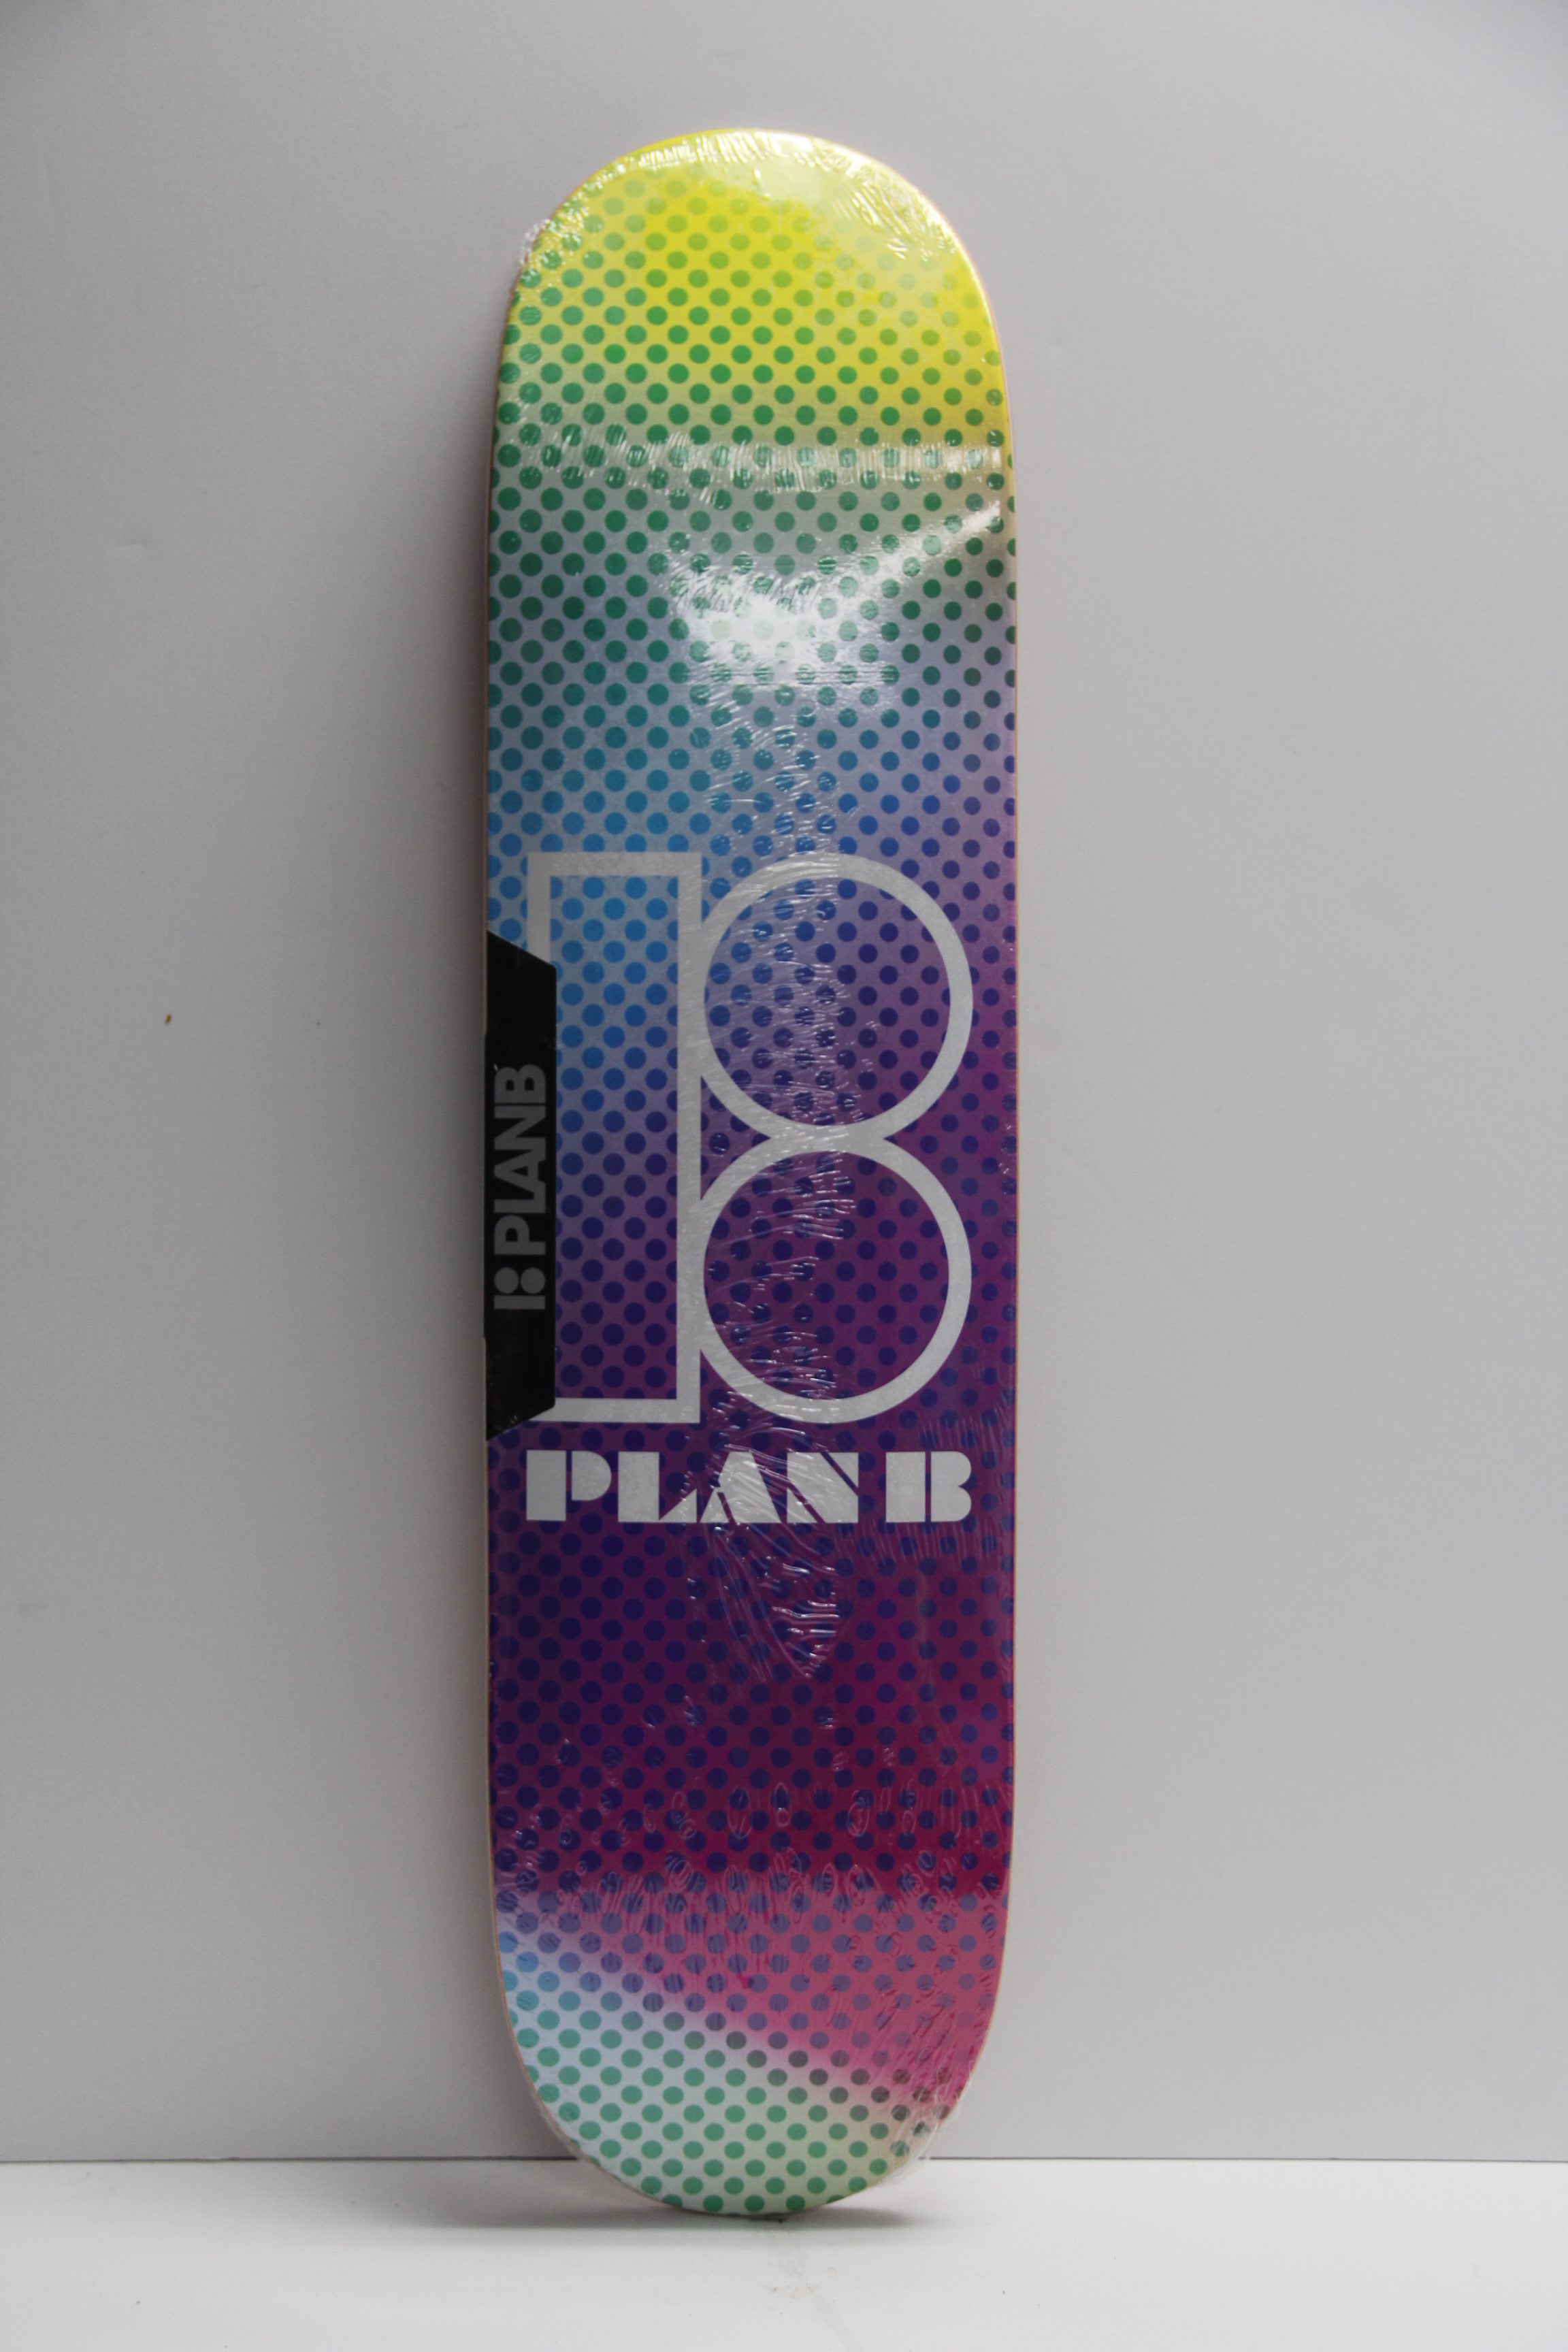 Plan B Spots 8.0 deck